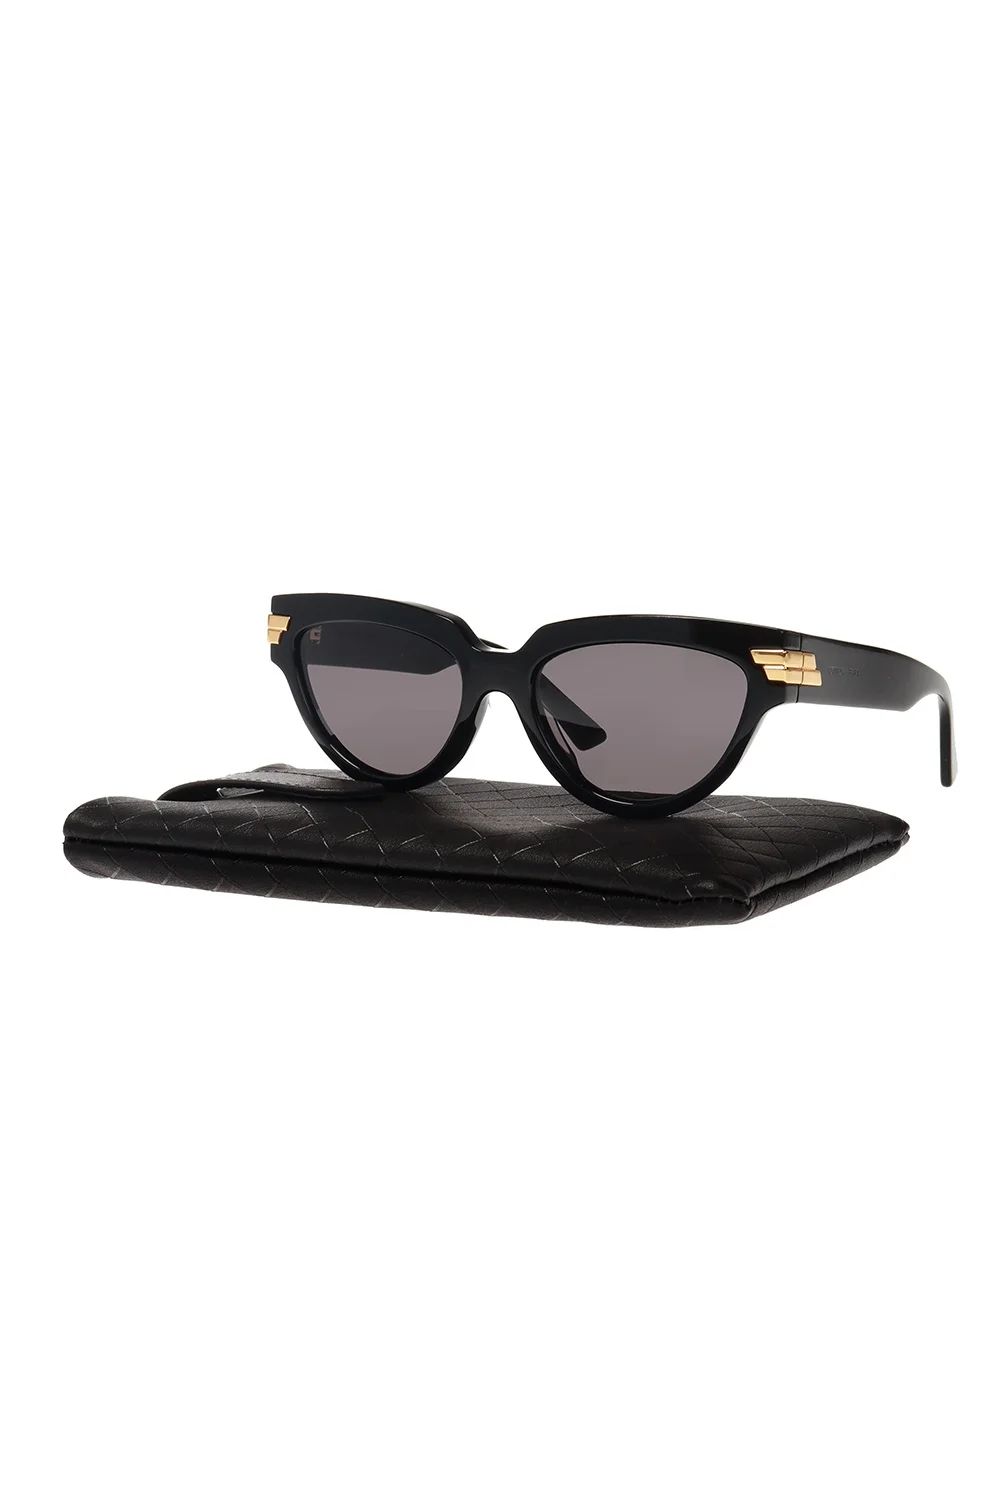 Bottega Veneta Eyewear Cat-Eye Sunglasses | Cettire Global